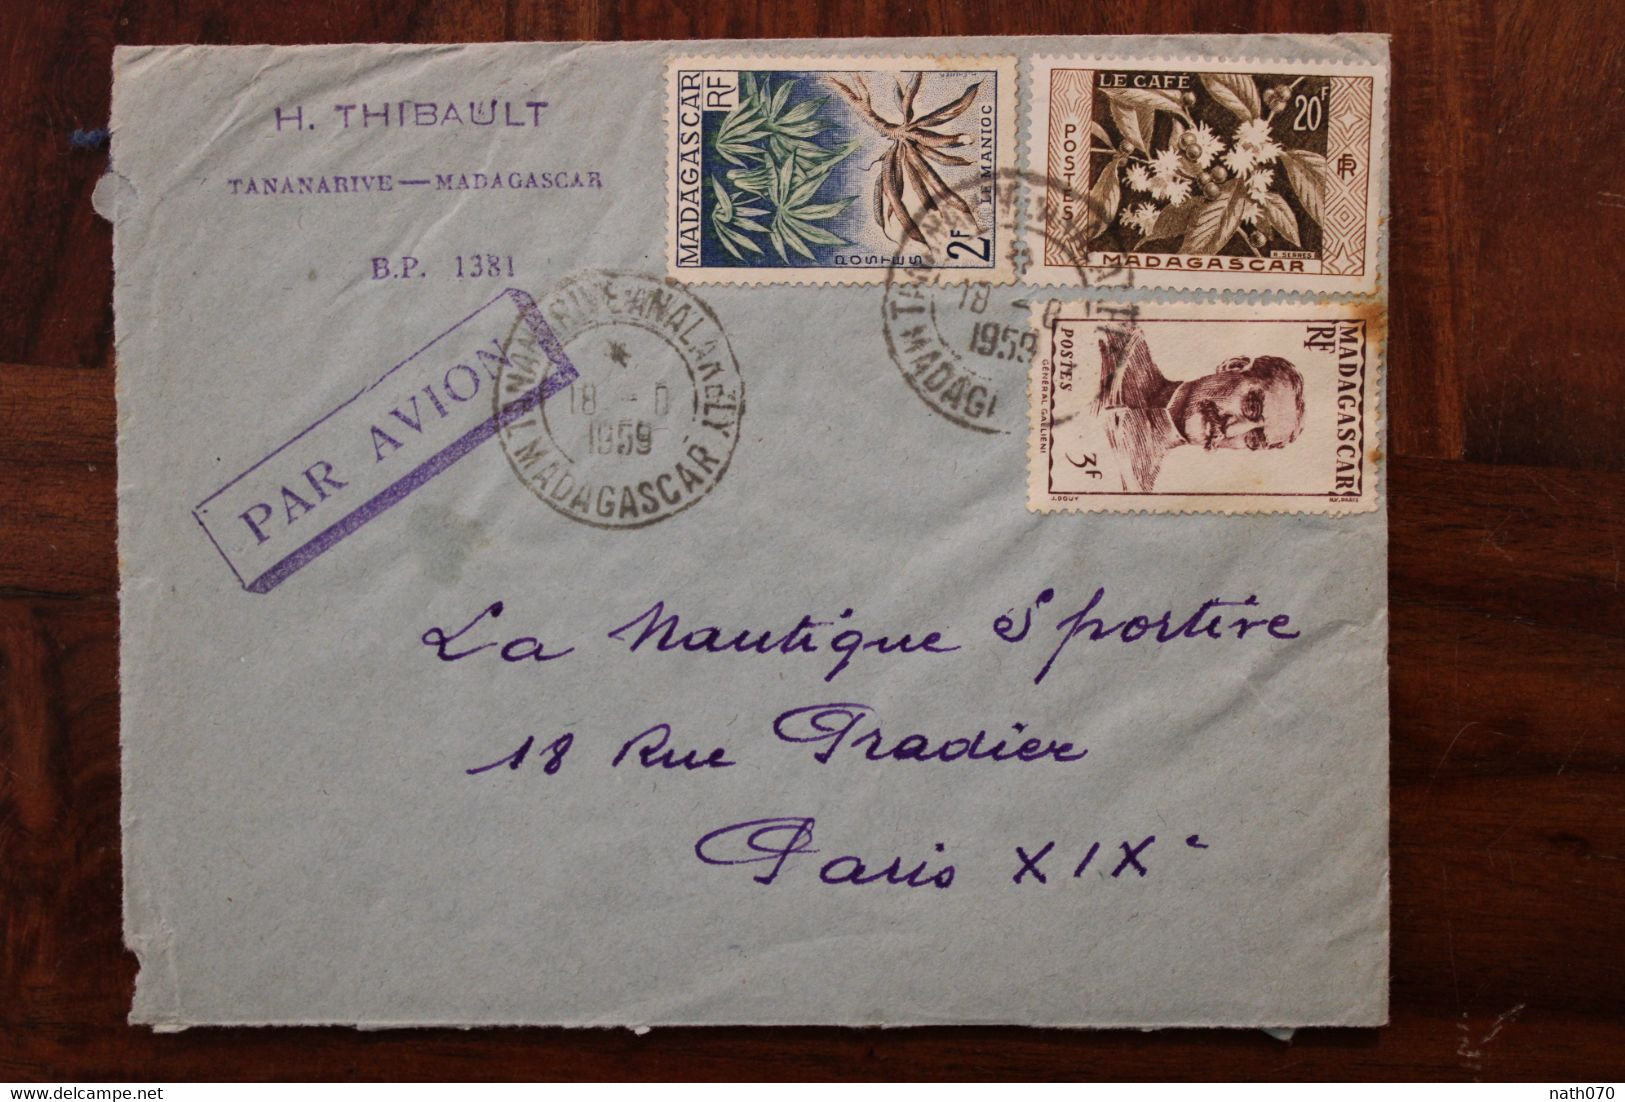 1959 Madagascar France Cover Air Mail Par Avion - Covers & Documents